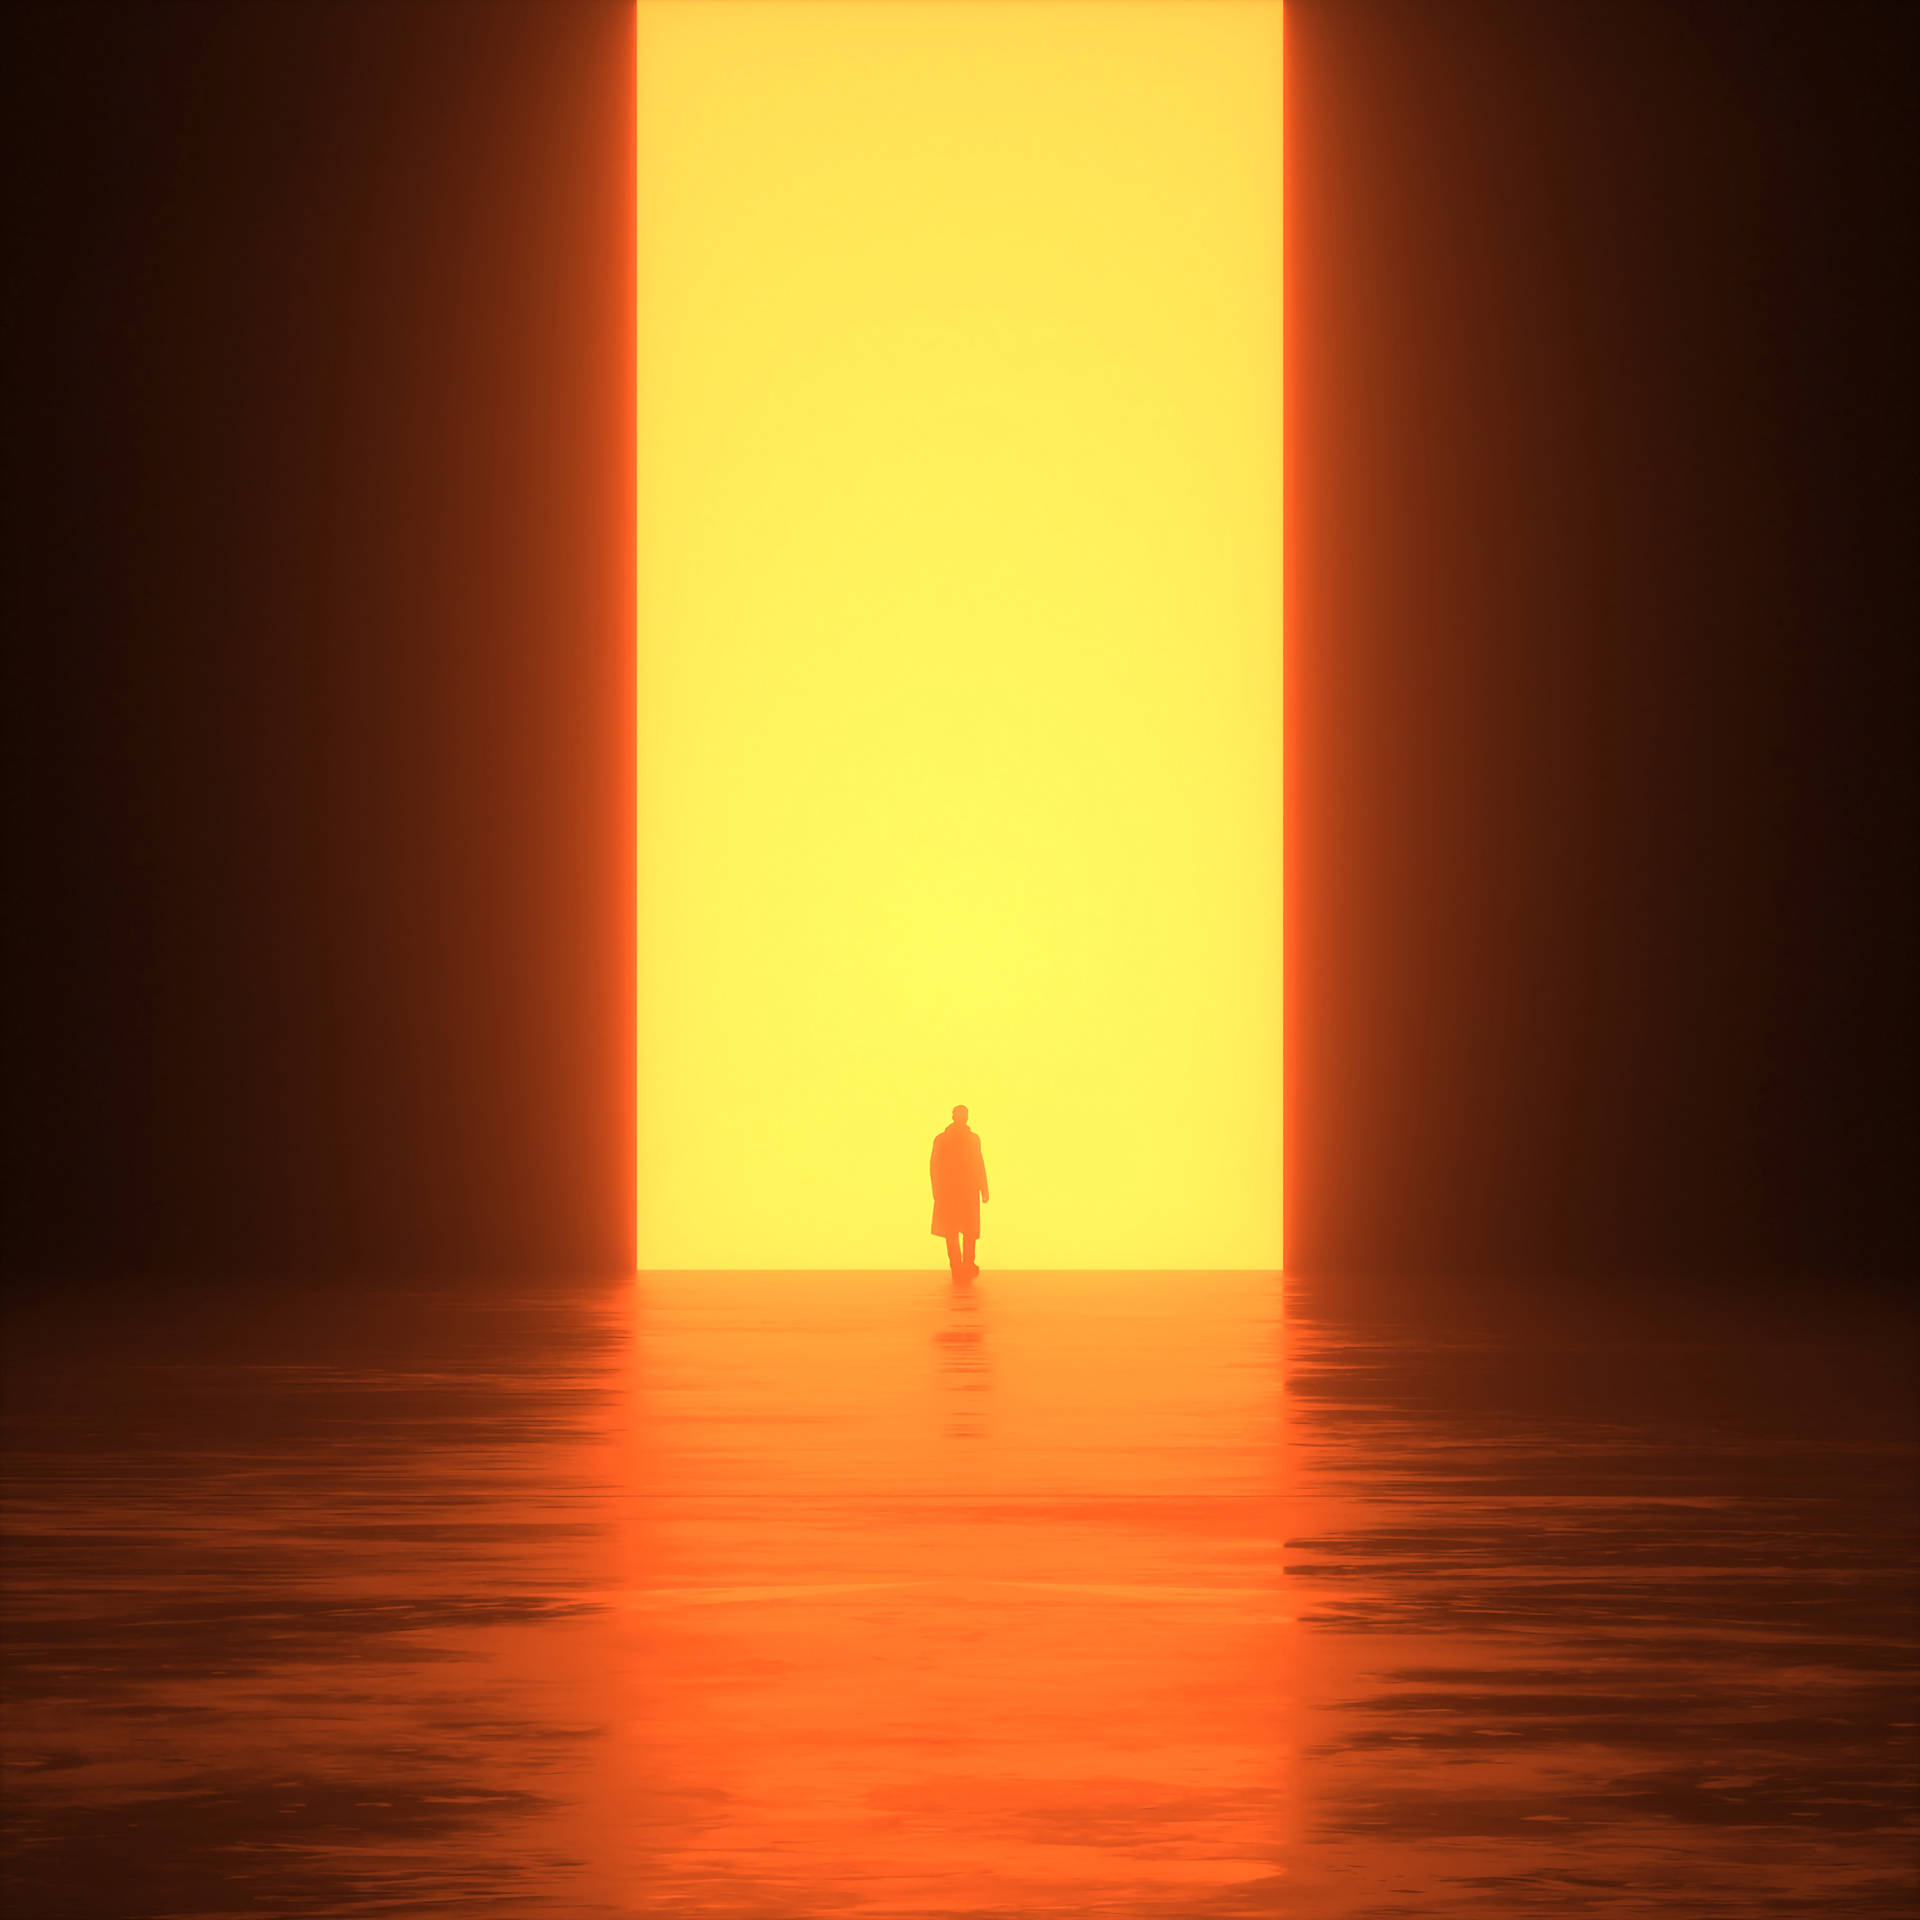 Man Entering Sun-like Portal Wallpaper